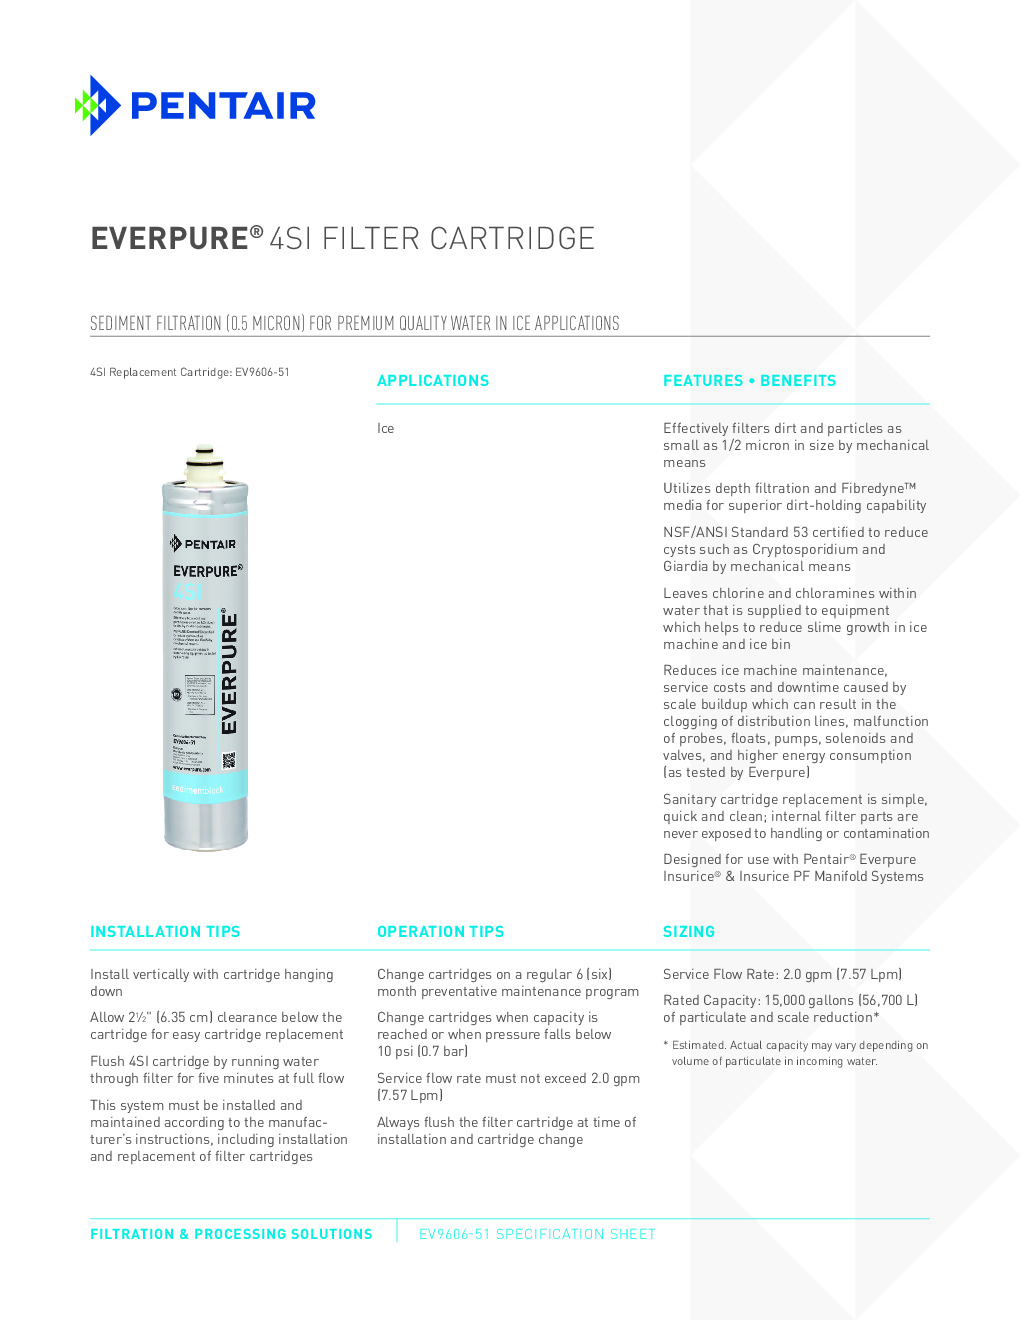 Everpure EV960651 Cartridge Water Filtration System